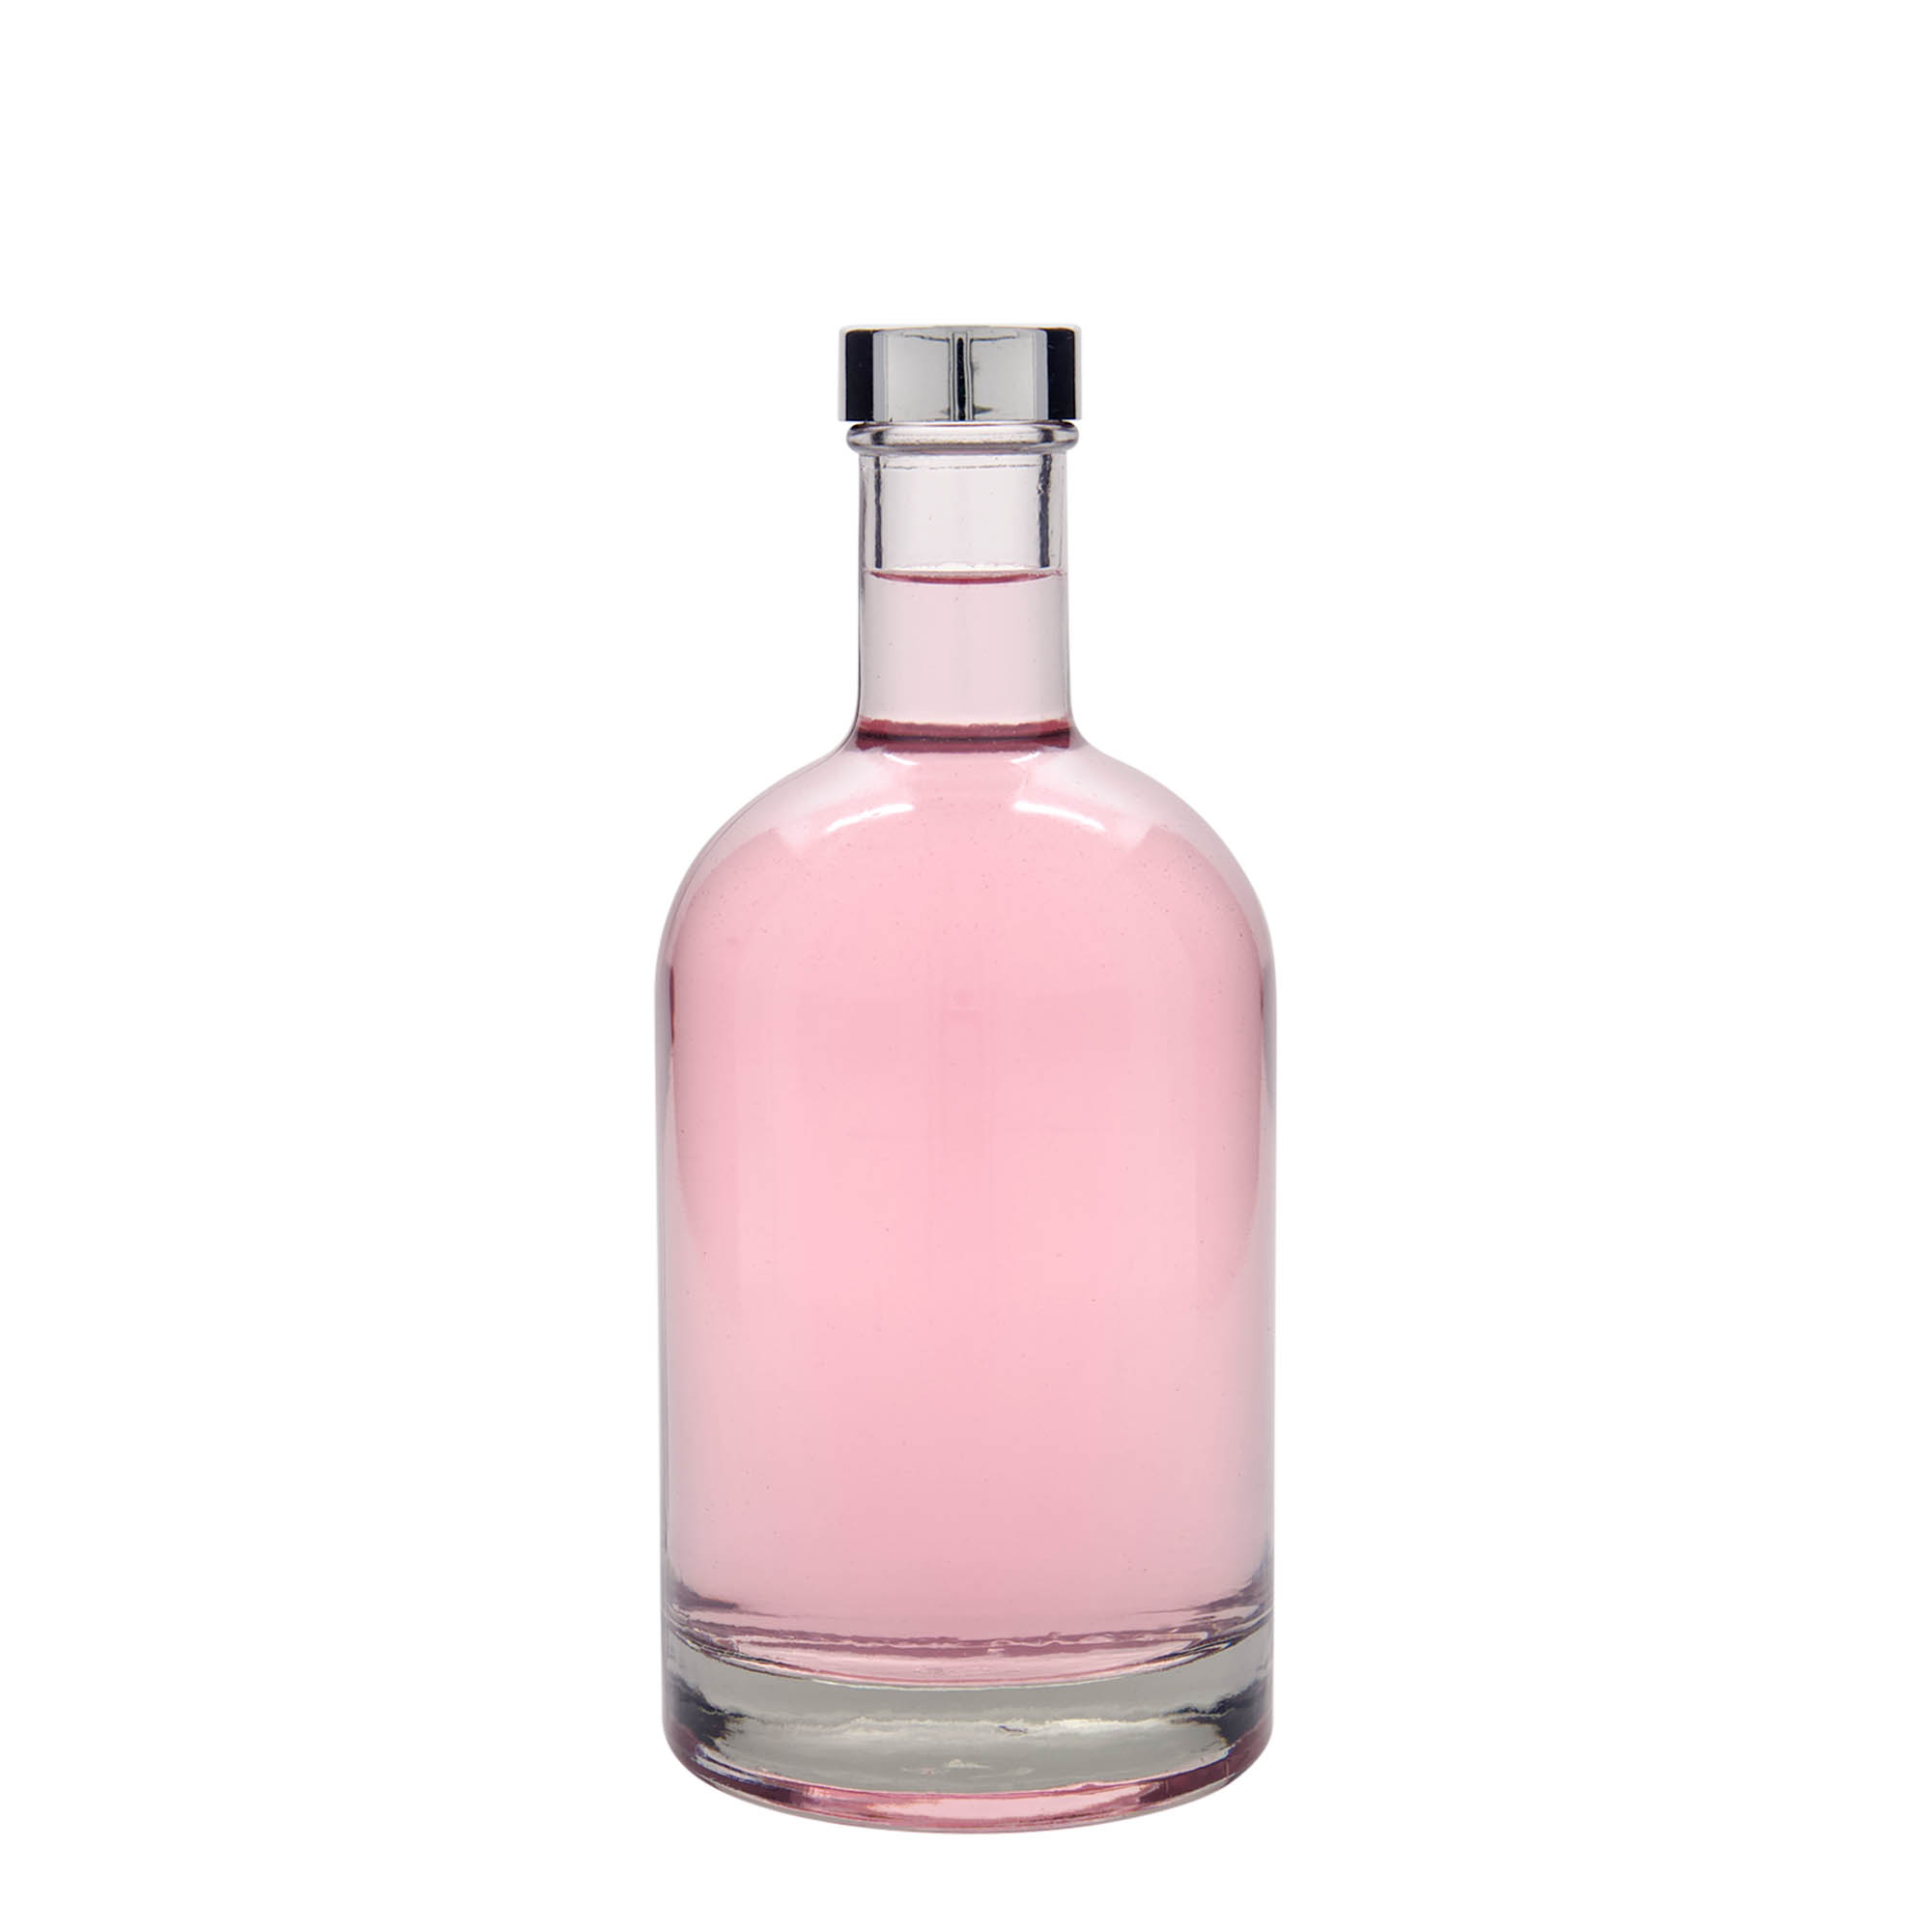 700 ml glass bottle 'First Class', closure: GPI 33